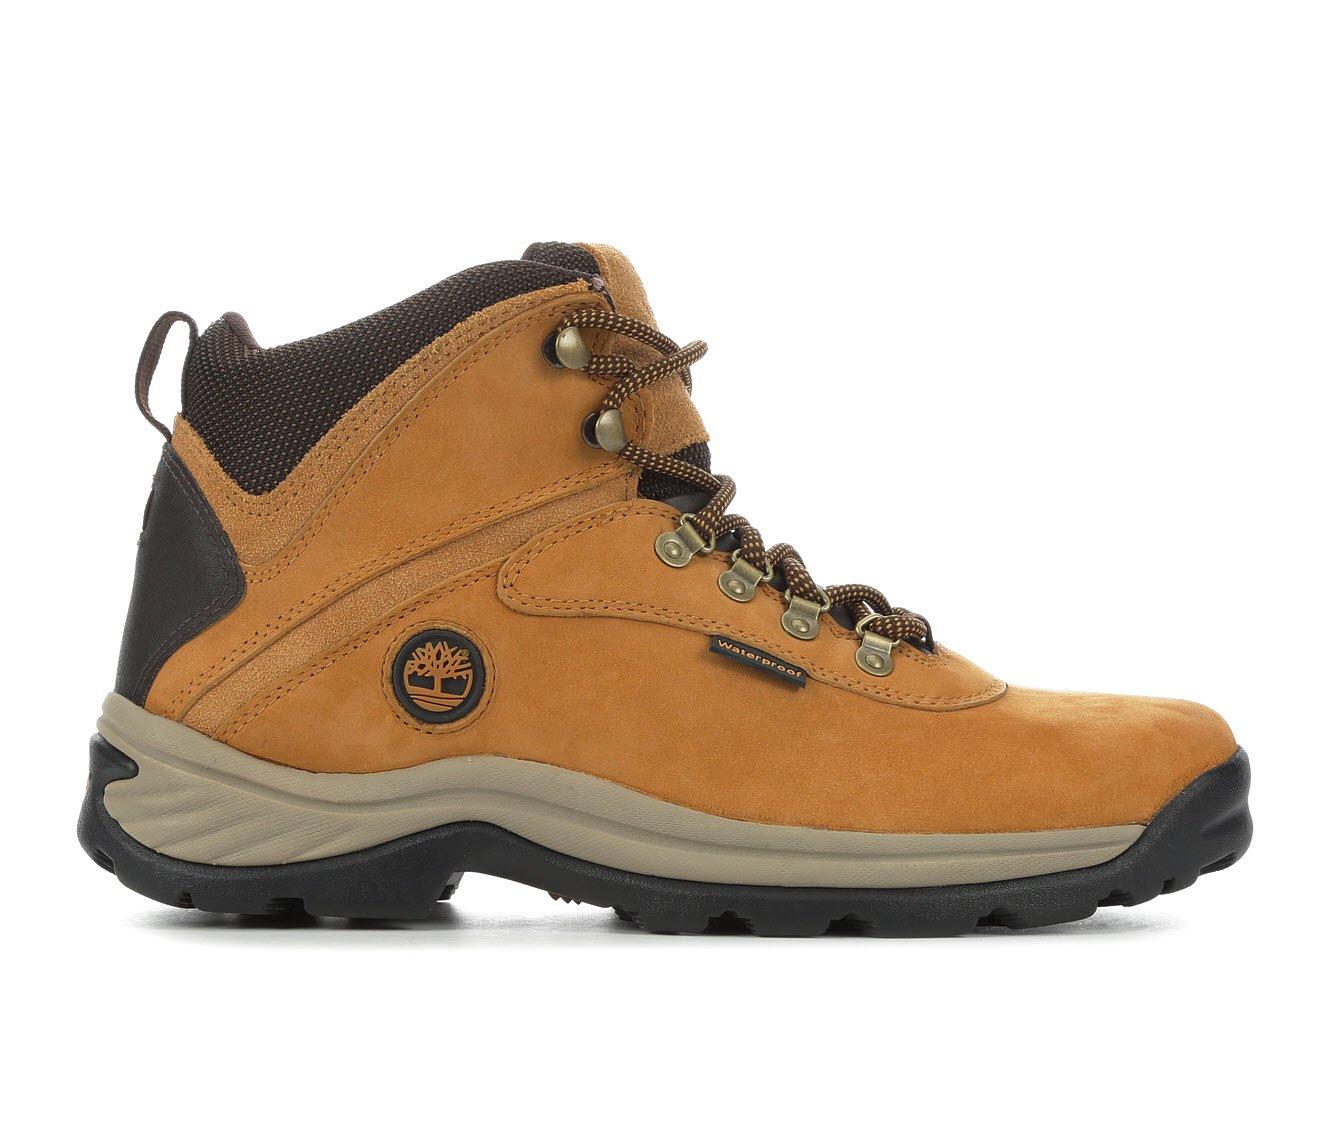 mineral capacidad maravilloso Timberland Boots For Men | Shoe Carnival